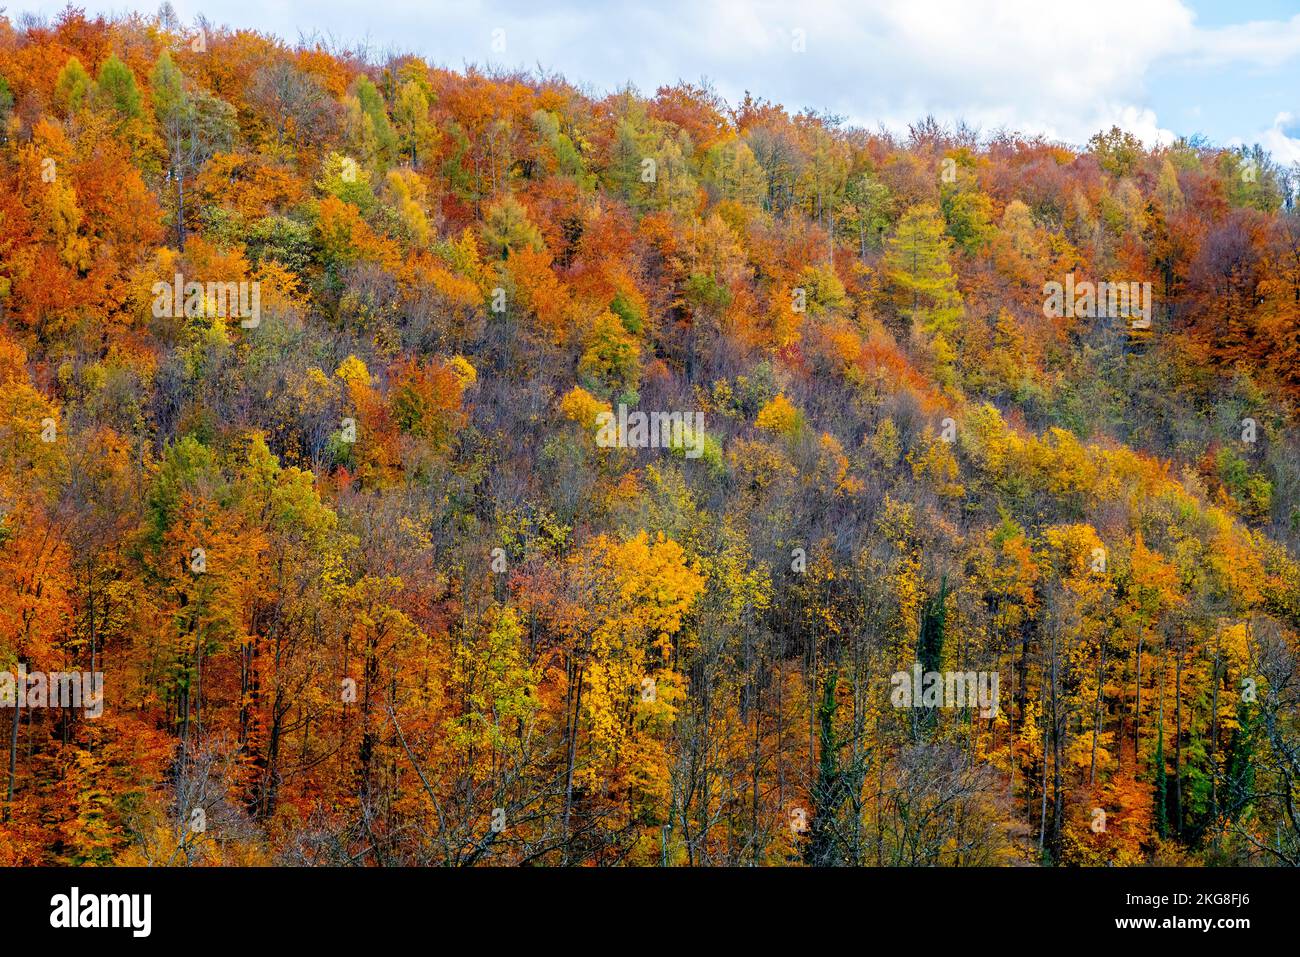 Black Forest in autumn colors Grenzach, Grenzach-Wyhlen, Baden-Württemberg, Germany. Stock Photo